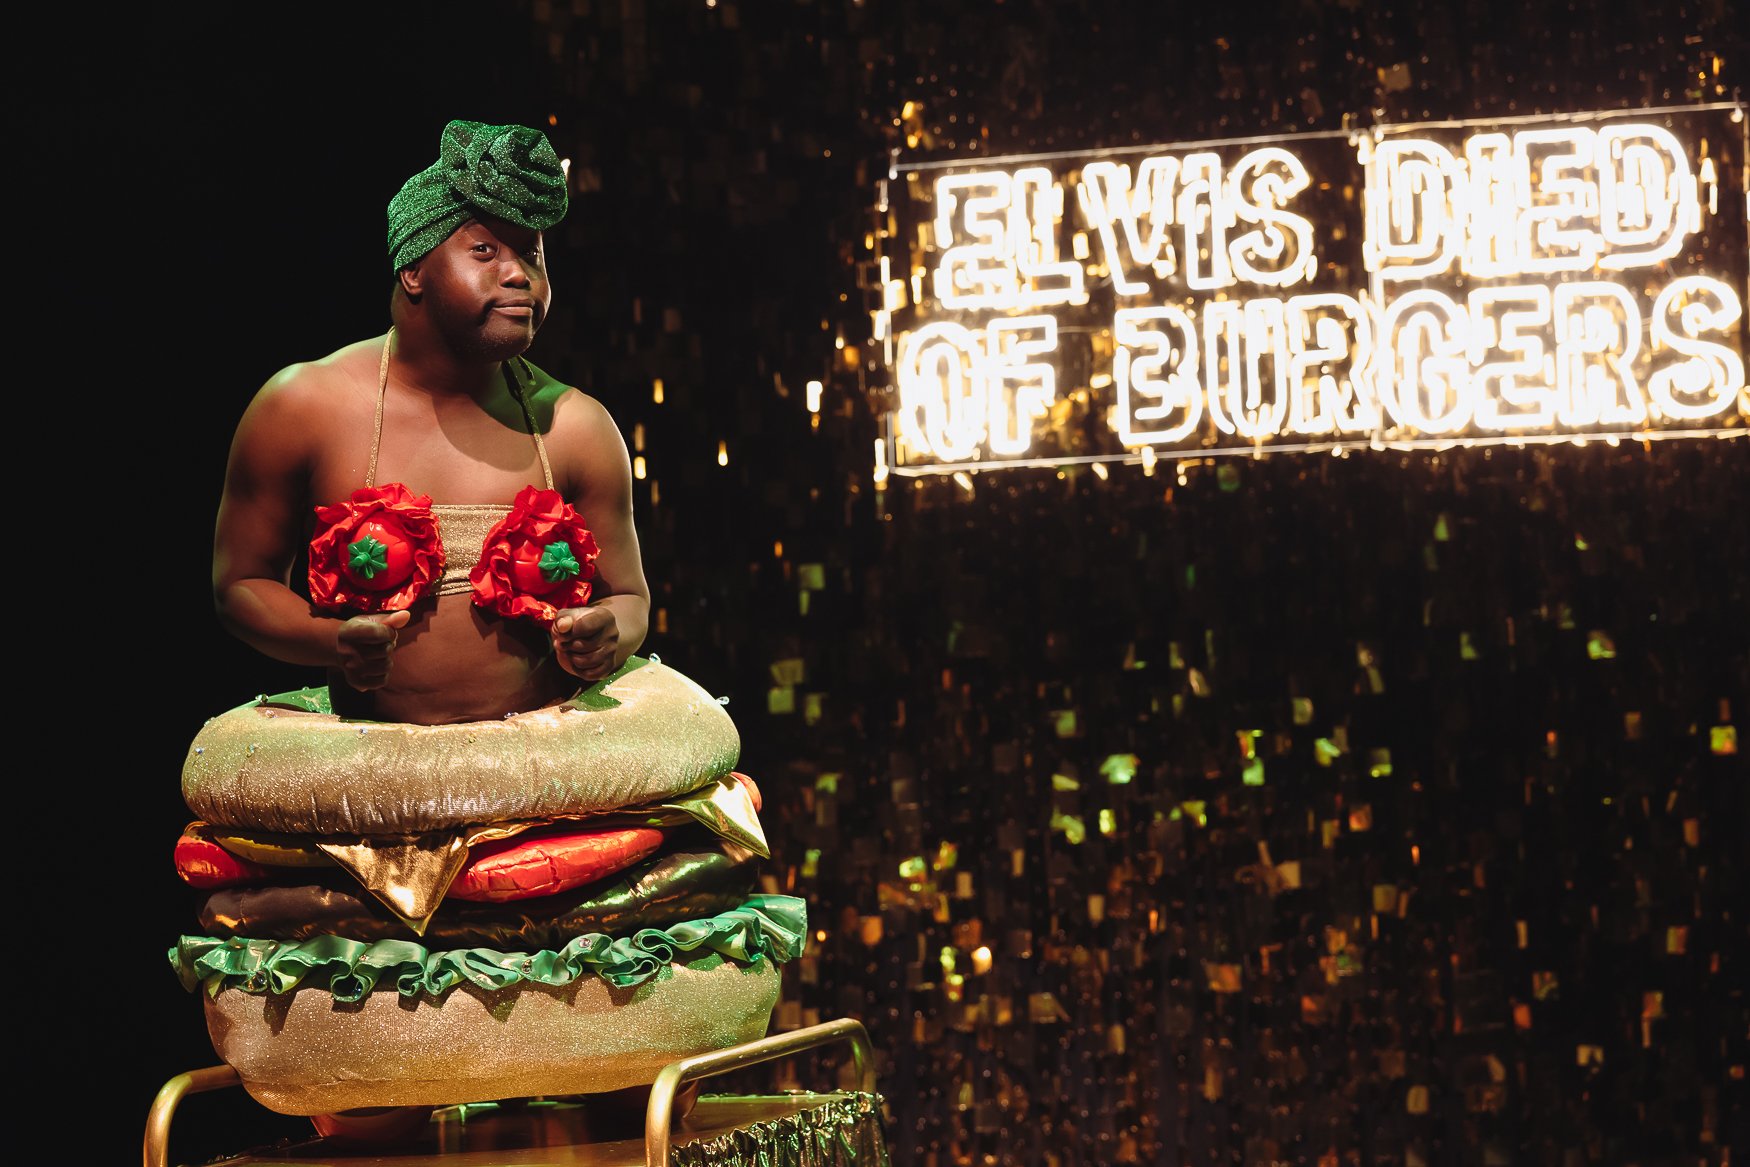 BLINK 'Elvis Died of Burgers' 23 image-Roswitha Chesher LR-111.JPG